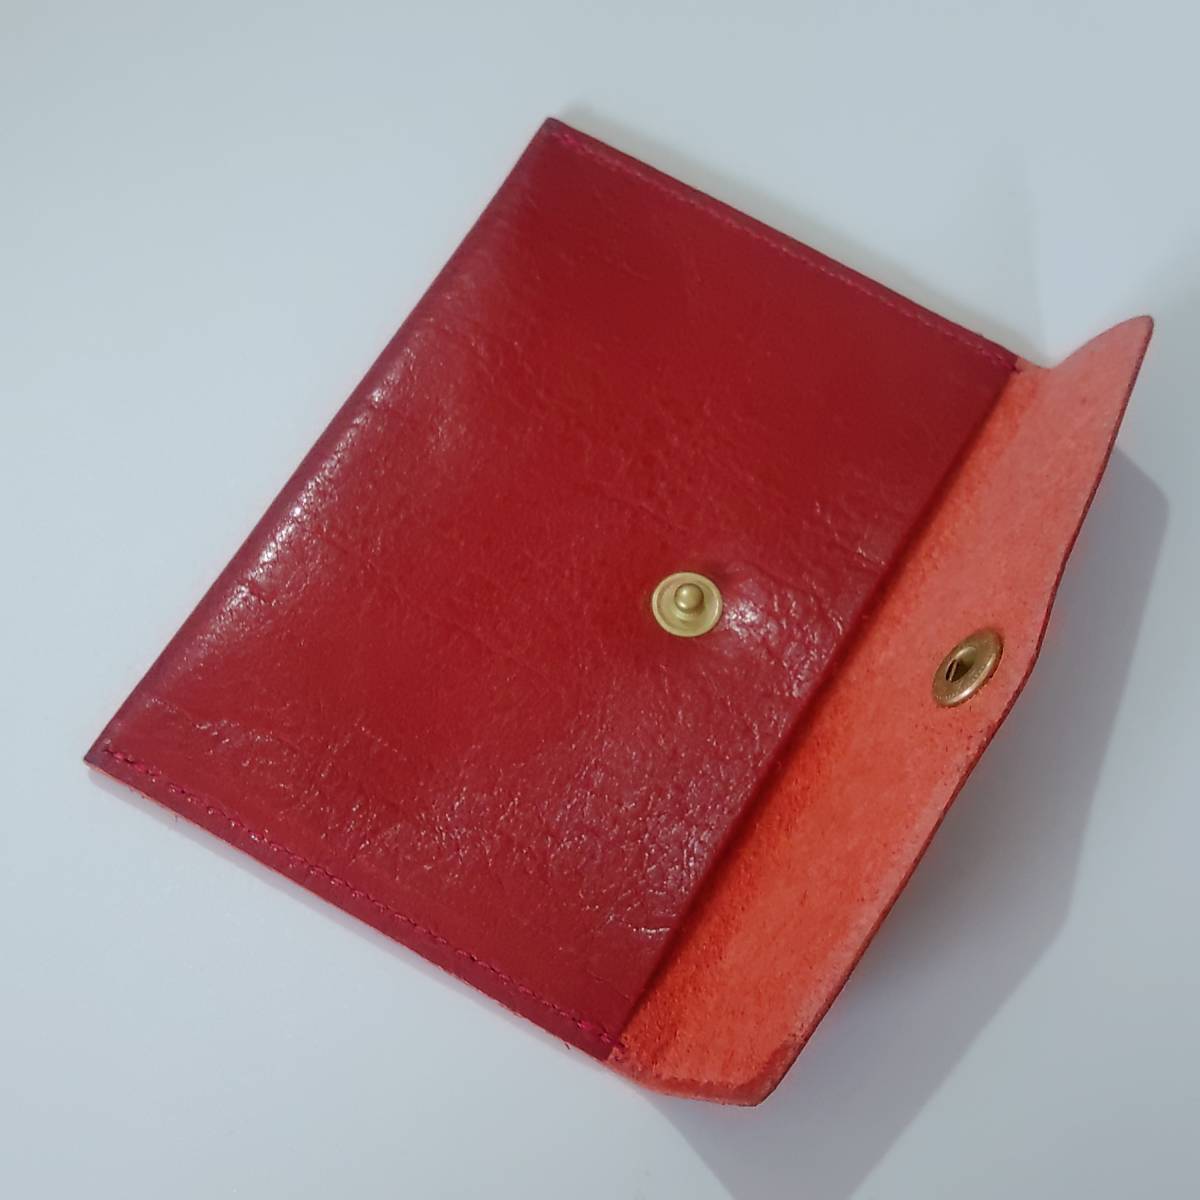 Dakota dakota original original leather tissue case pocket tissue inserting red red not for sale Novelty free shipping anonymity delivery 